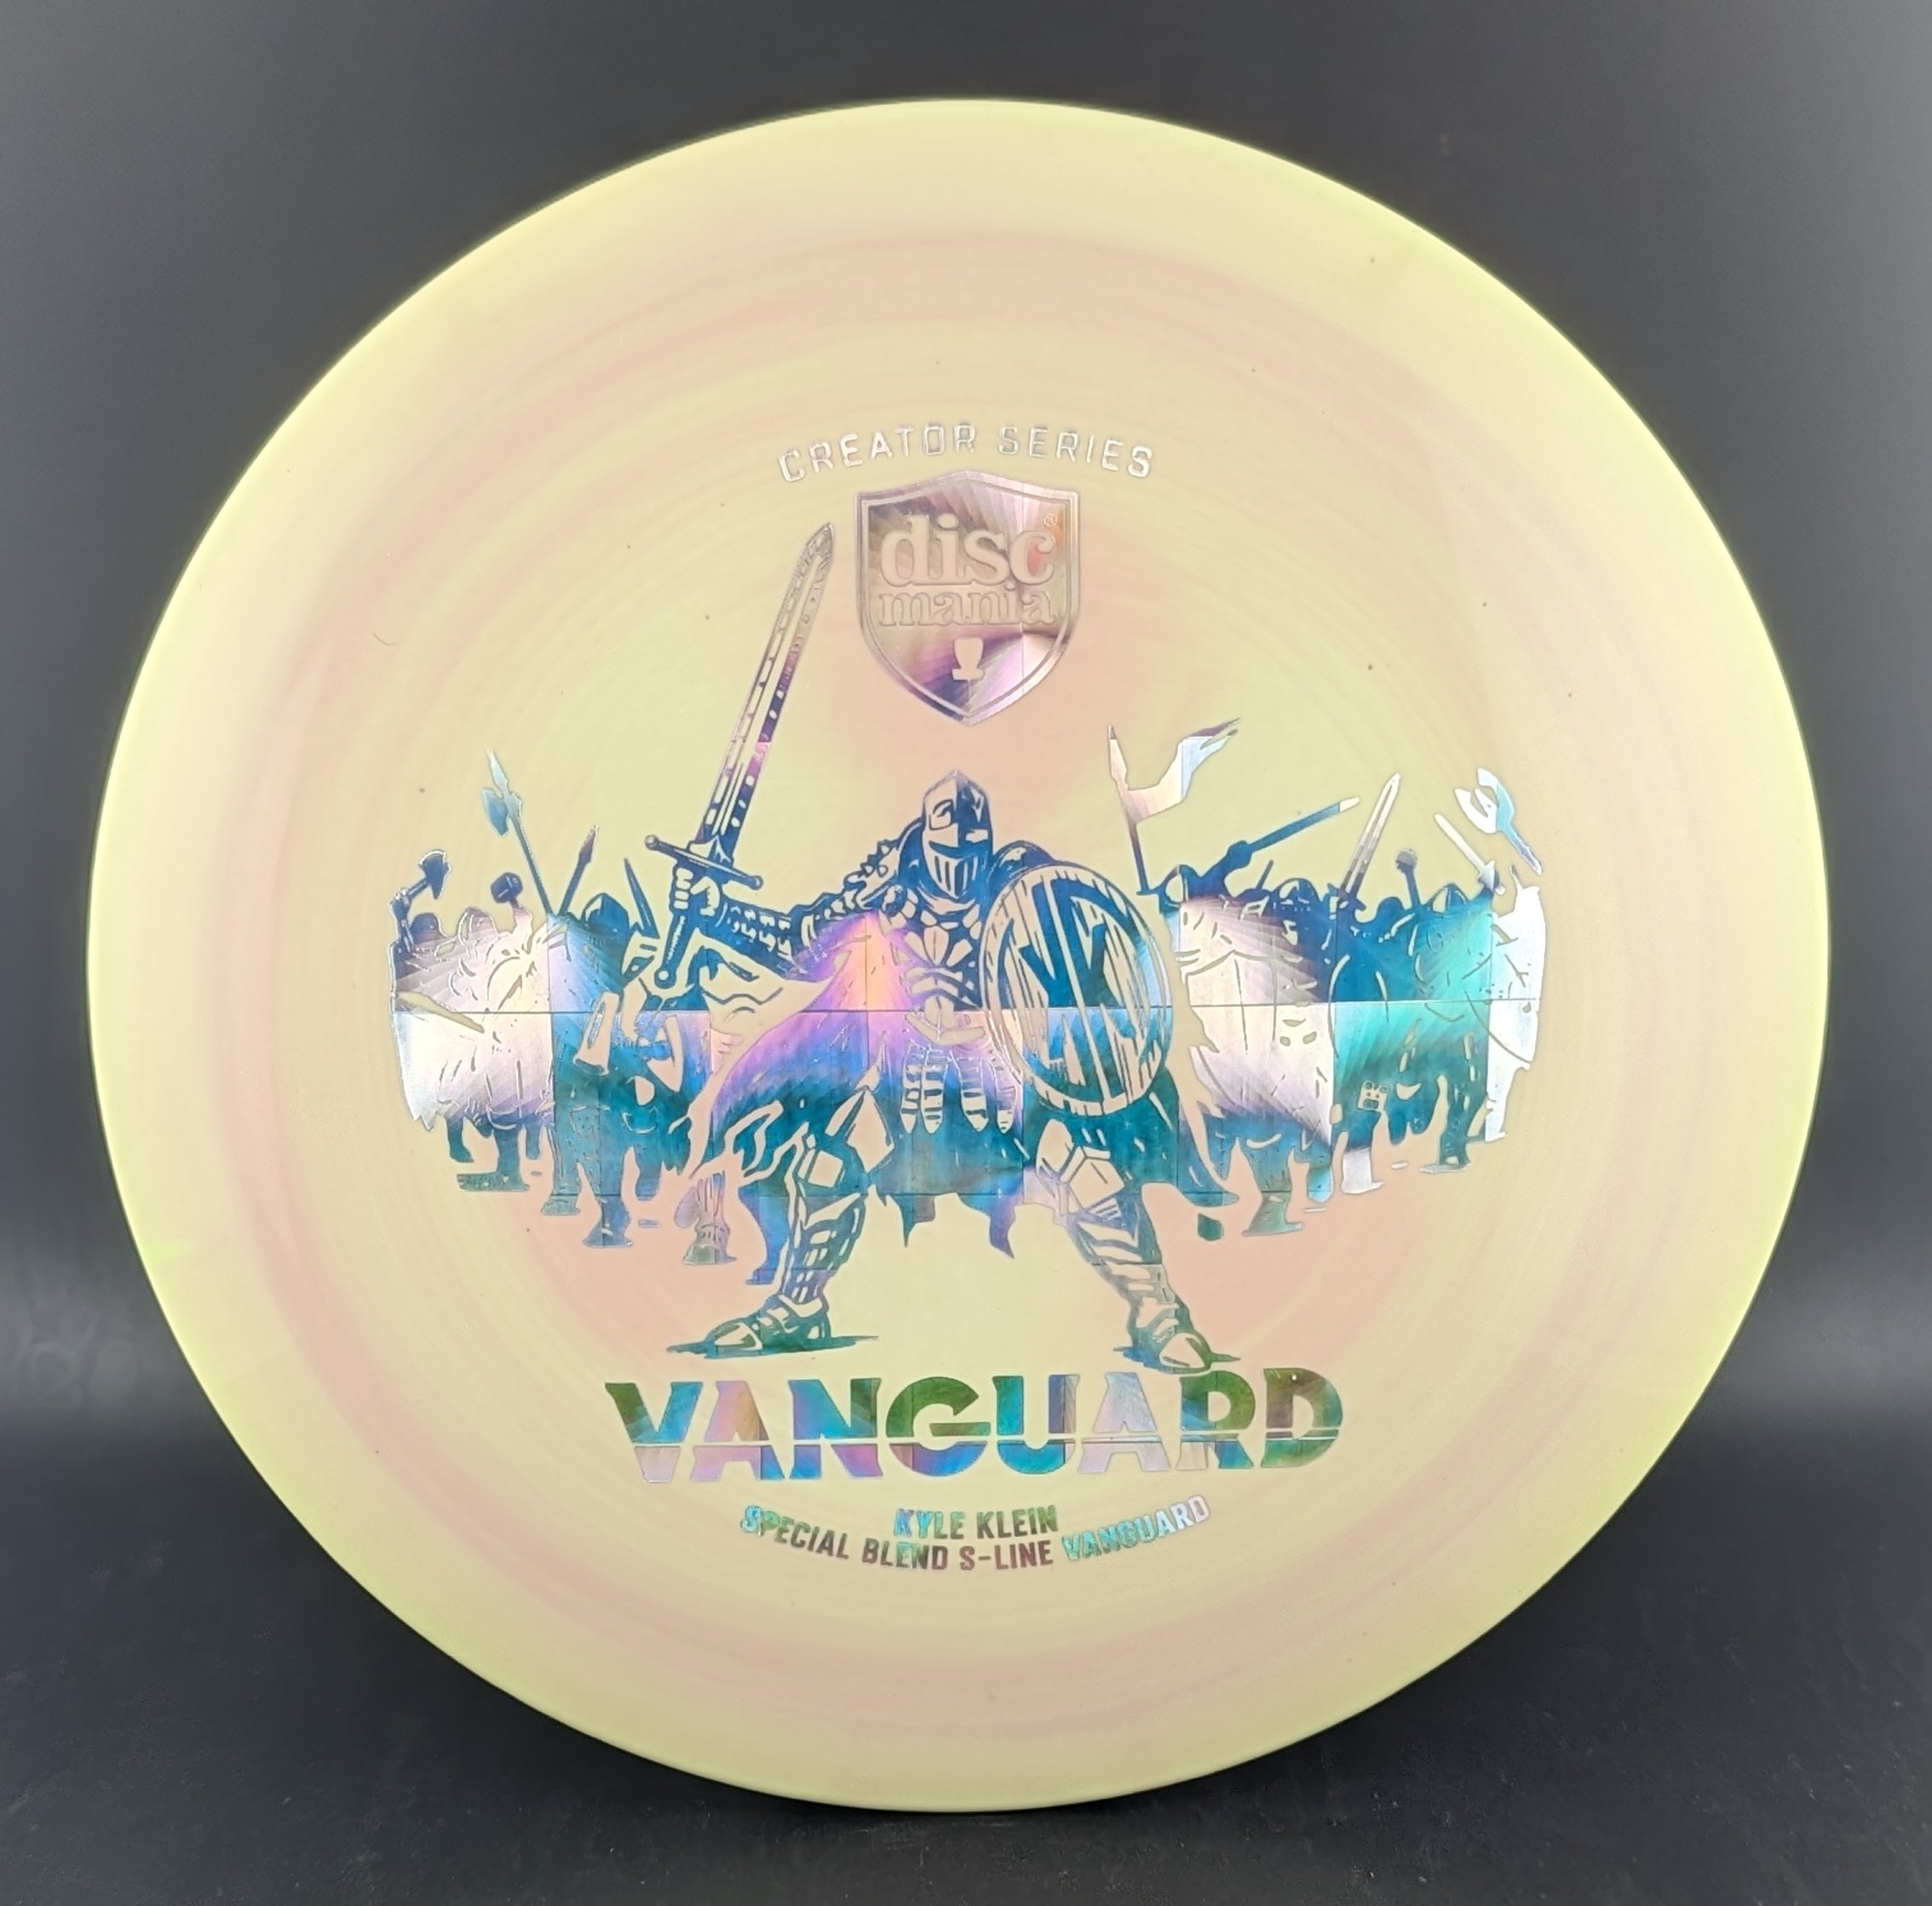 Discmania Kyle Klein Creator Series Special Blend Vanguard - 0